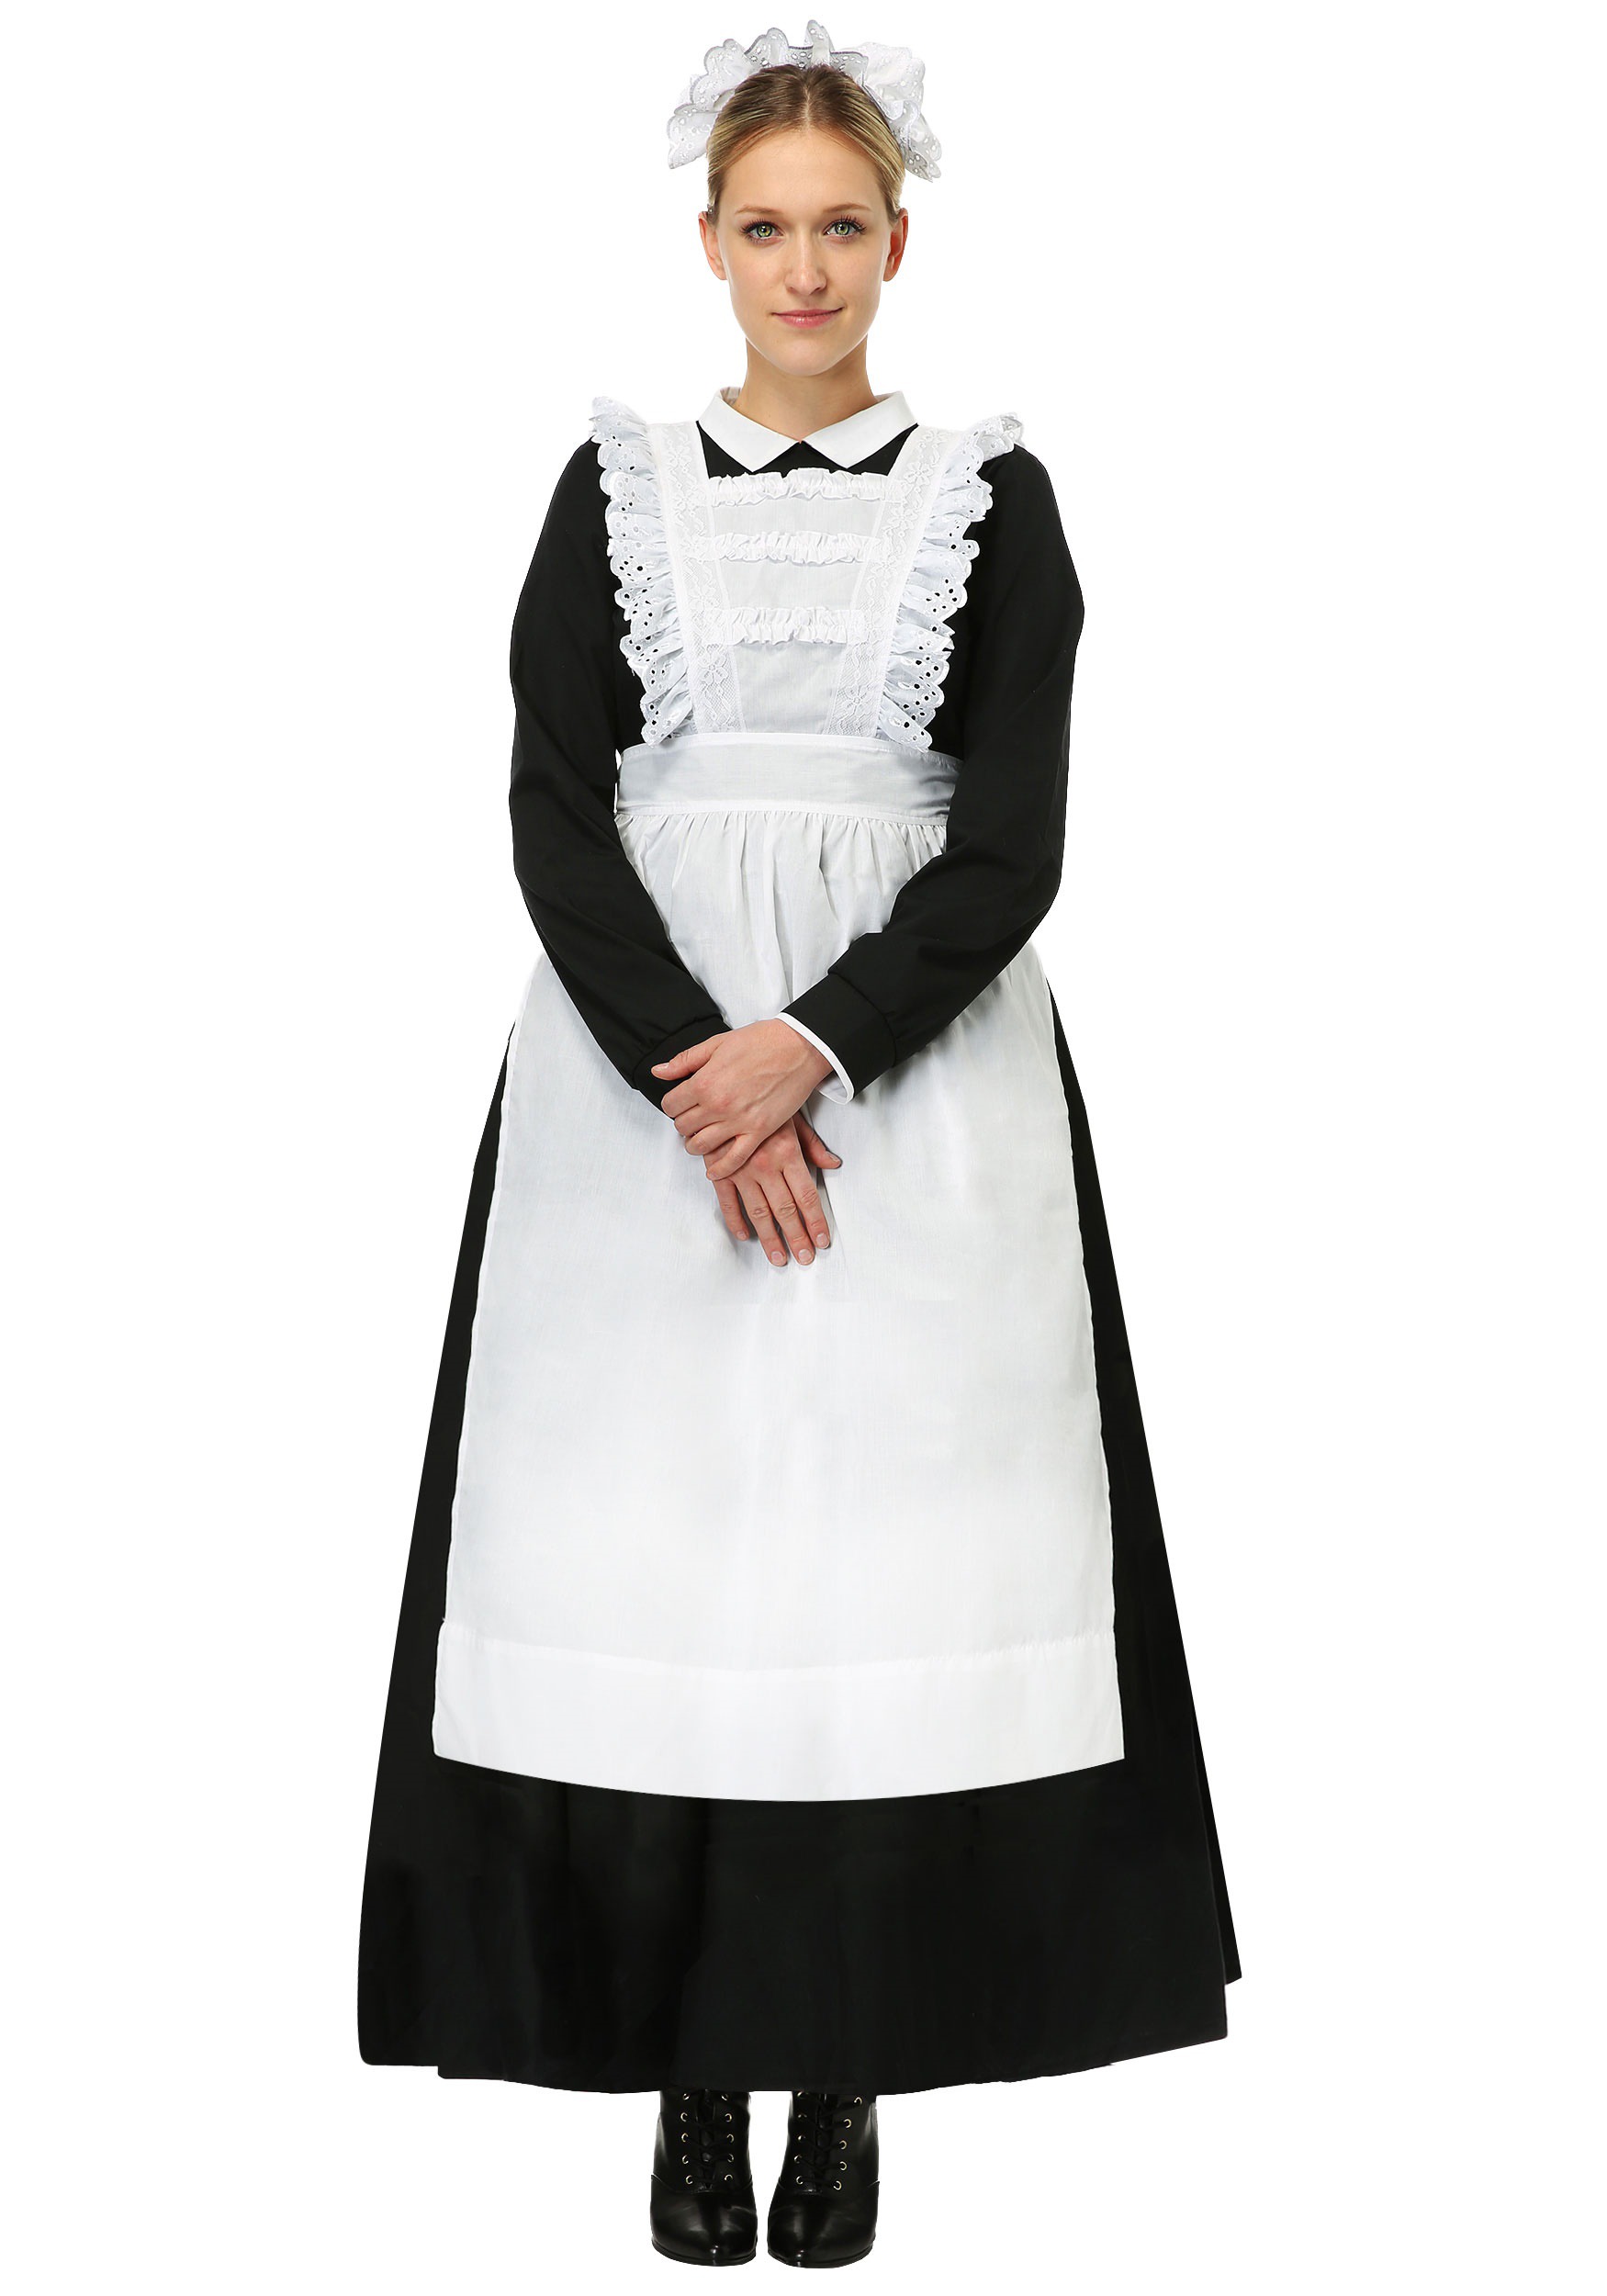 Women's Traditional Maid Fancy Dress Costume